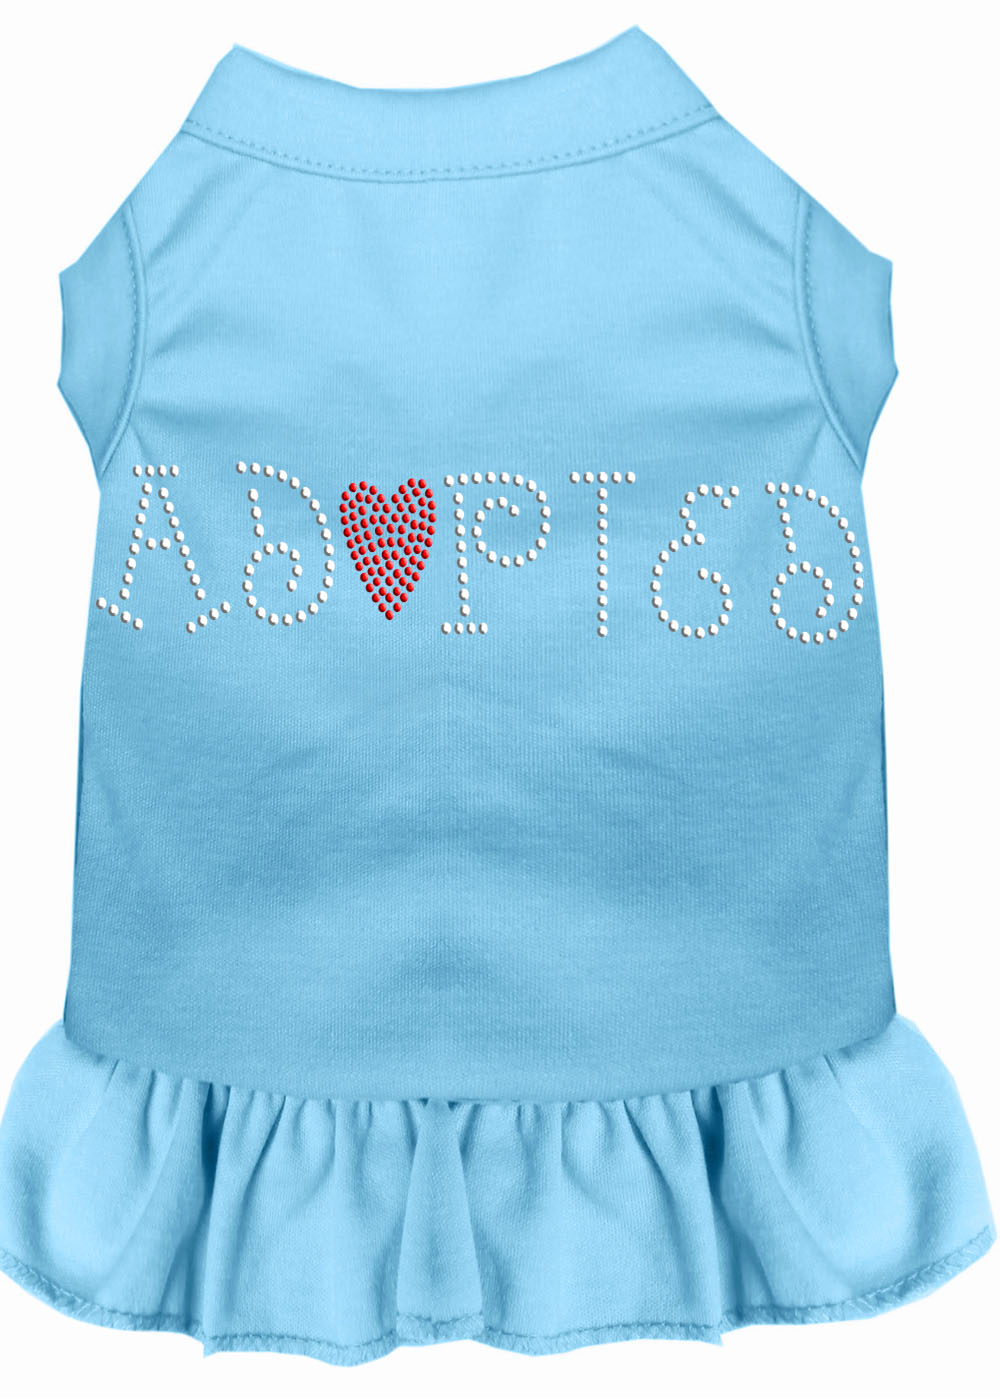 Adopted Rhinestone Dress Baby Blue Med